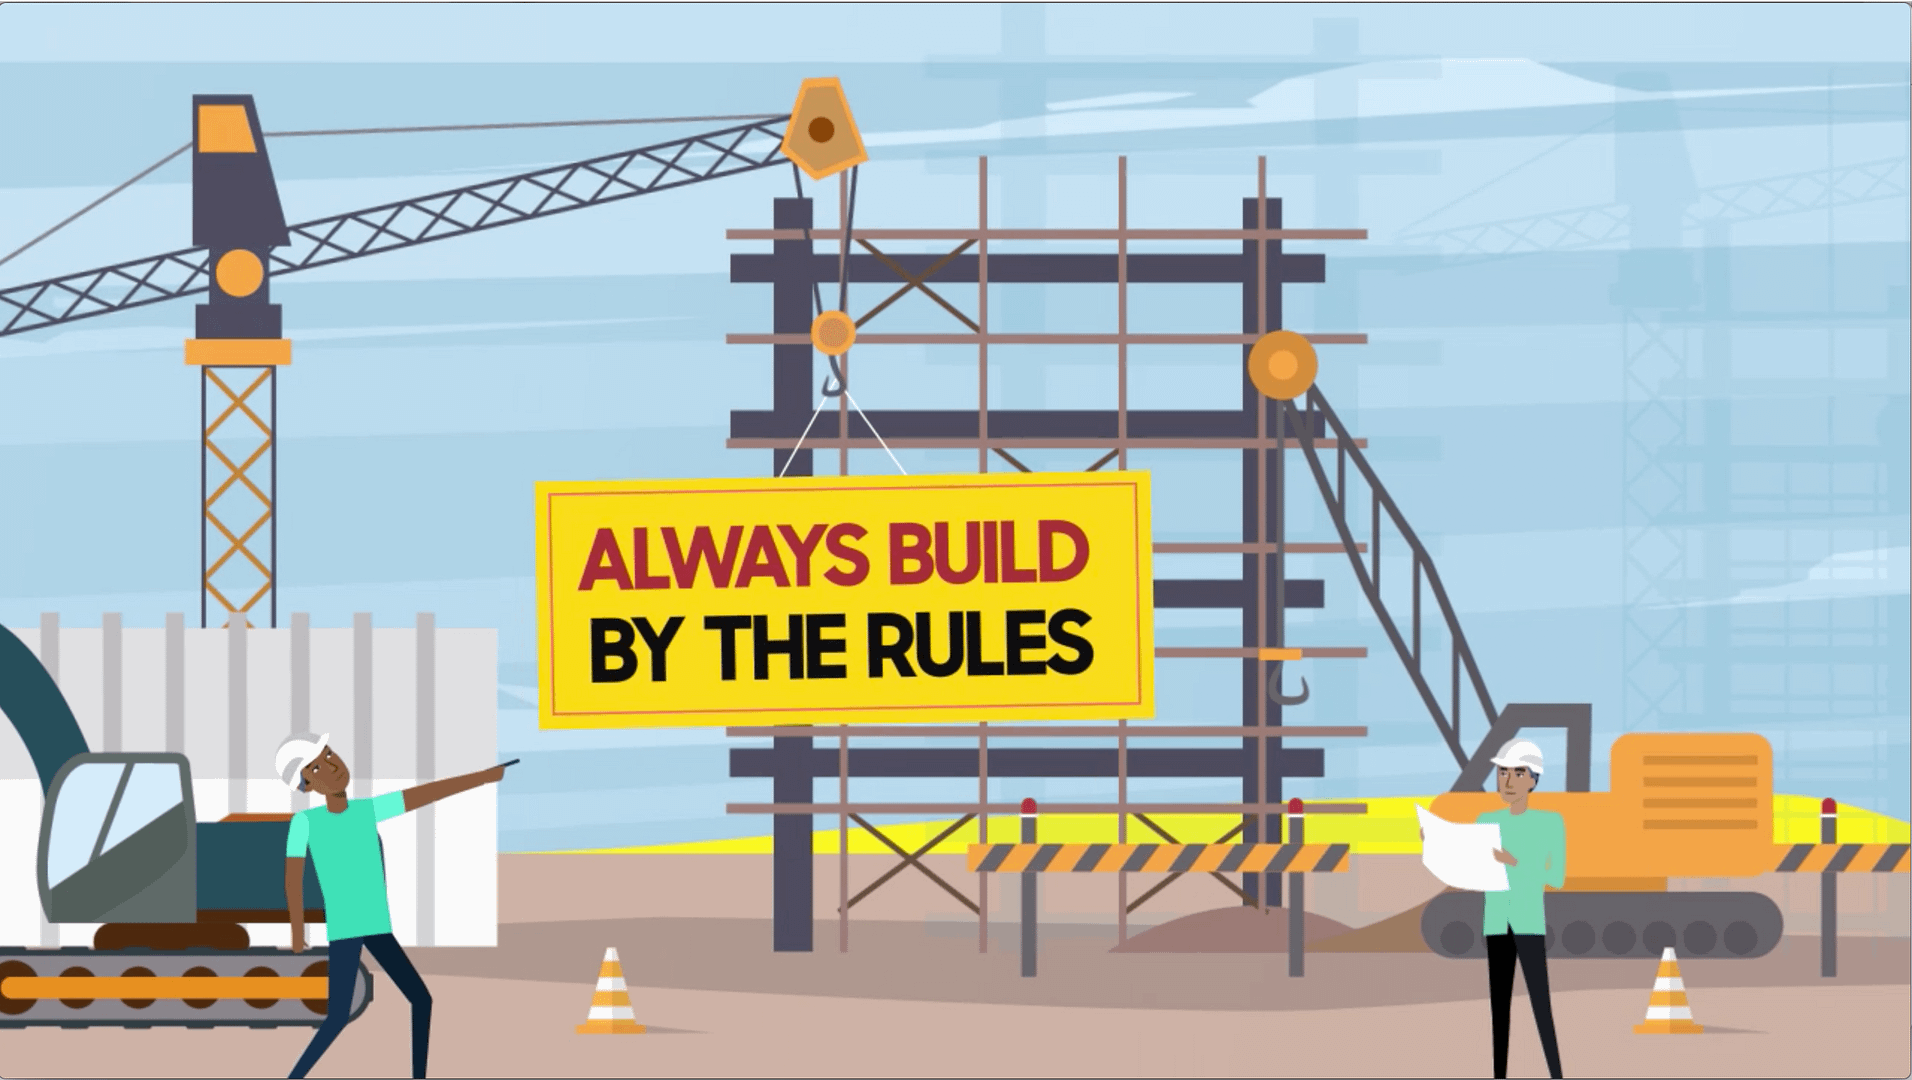 Illustration about building contractors